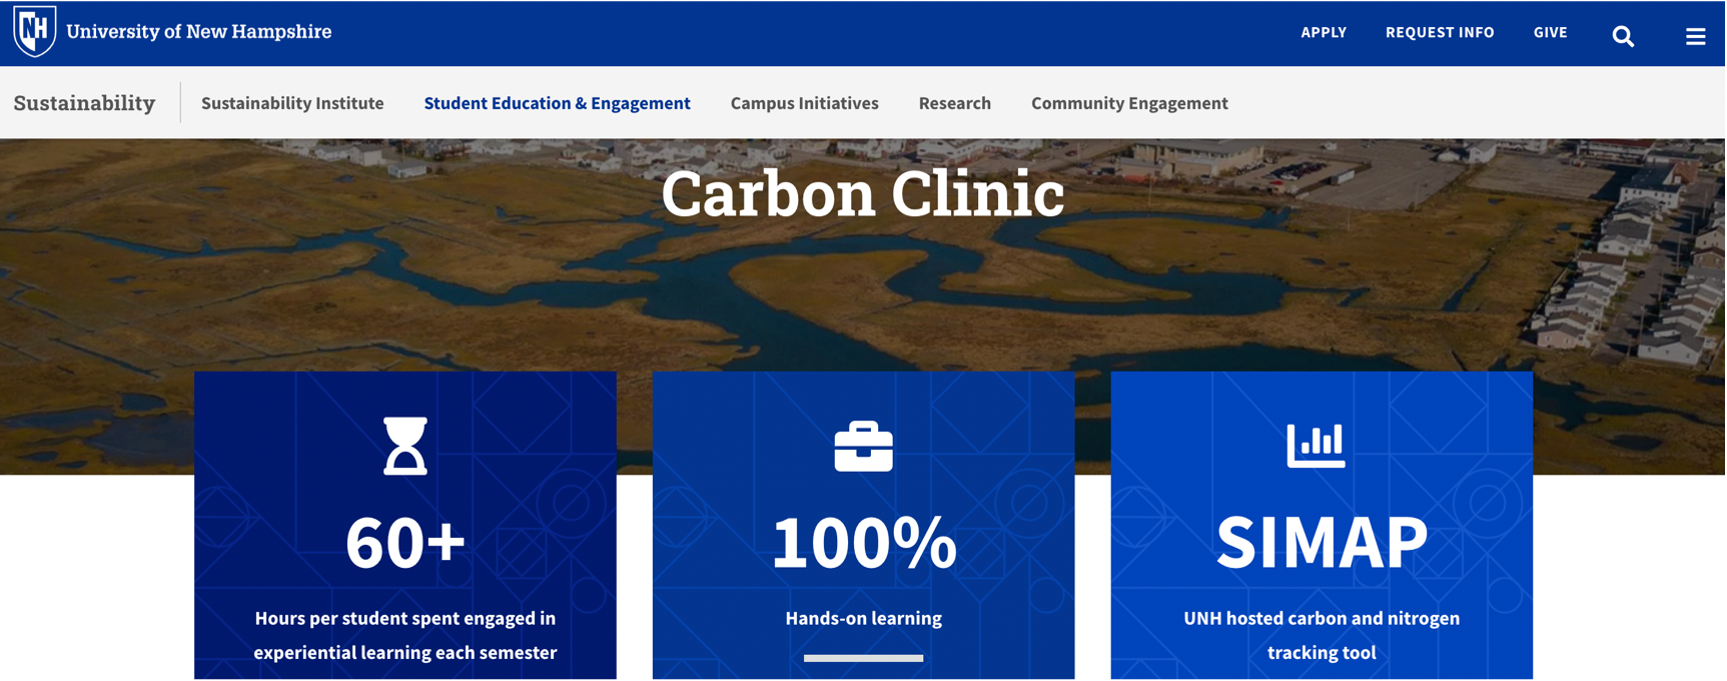 UNH Carbon Clinic.png